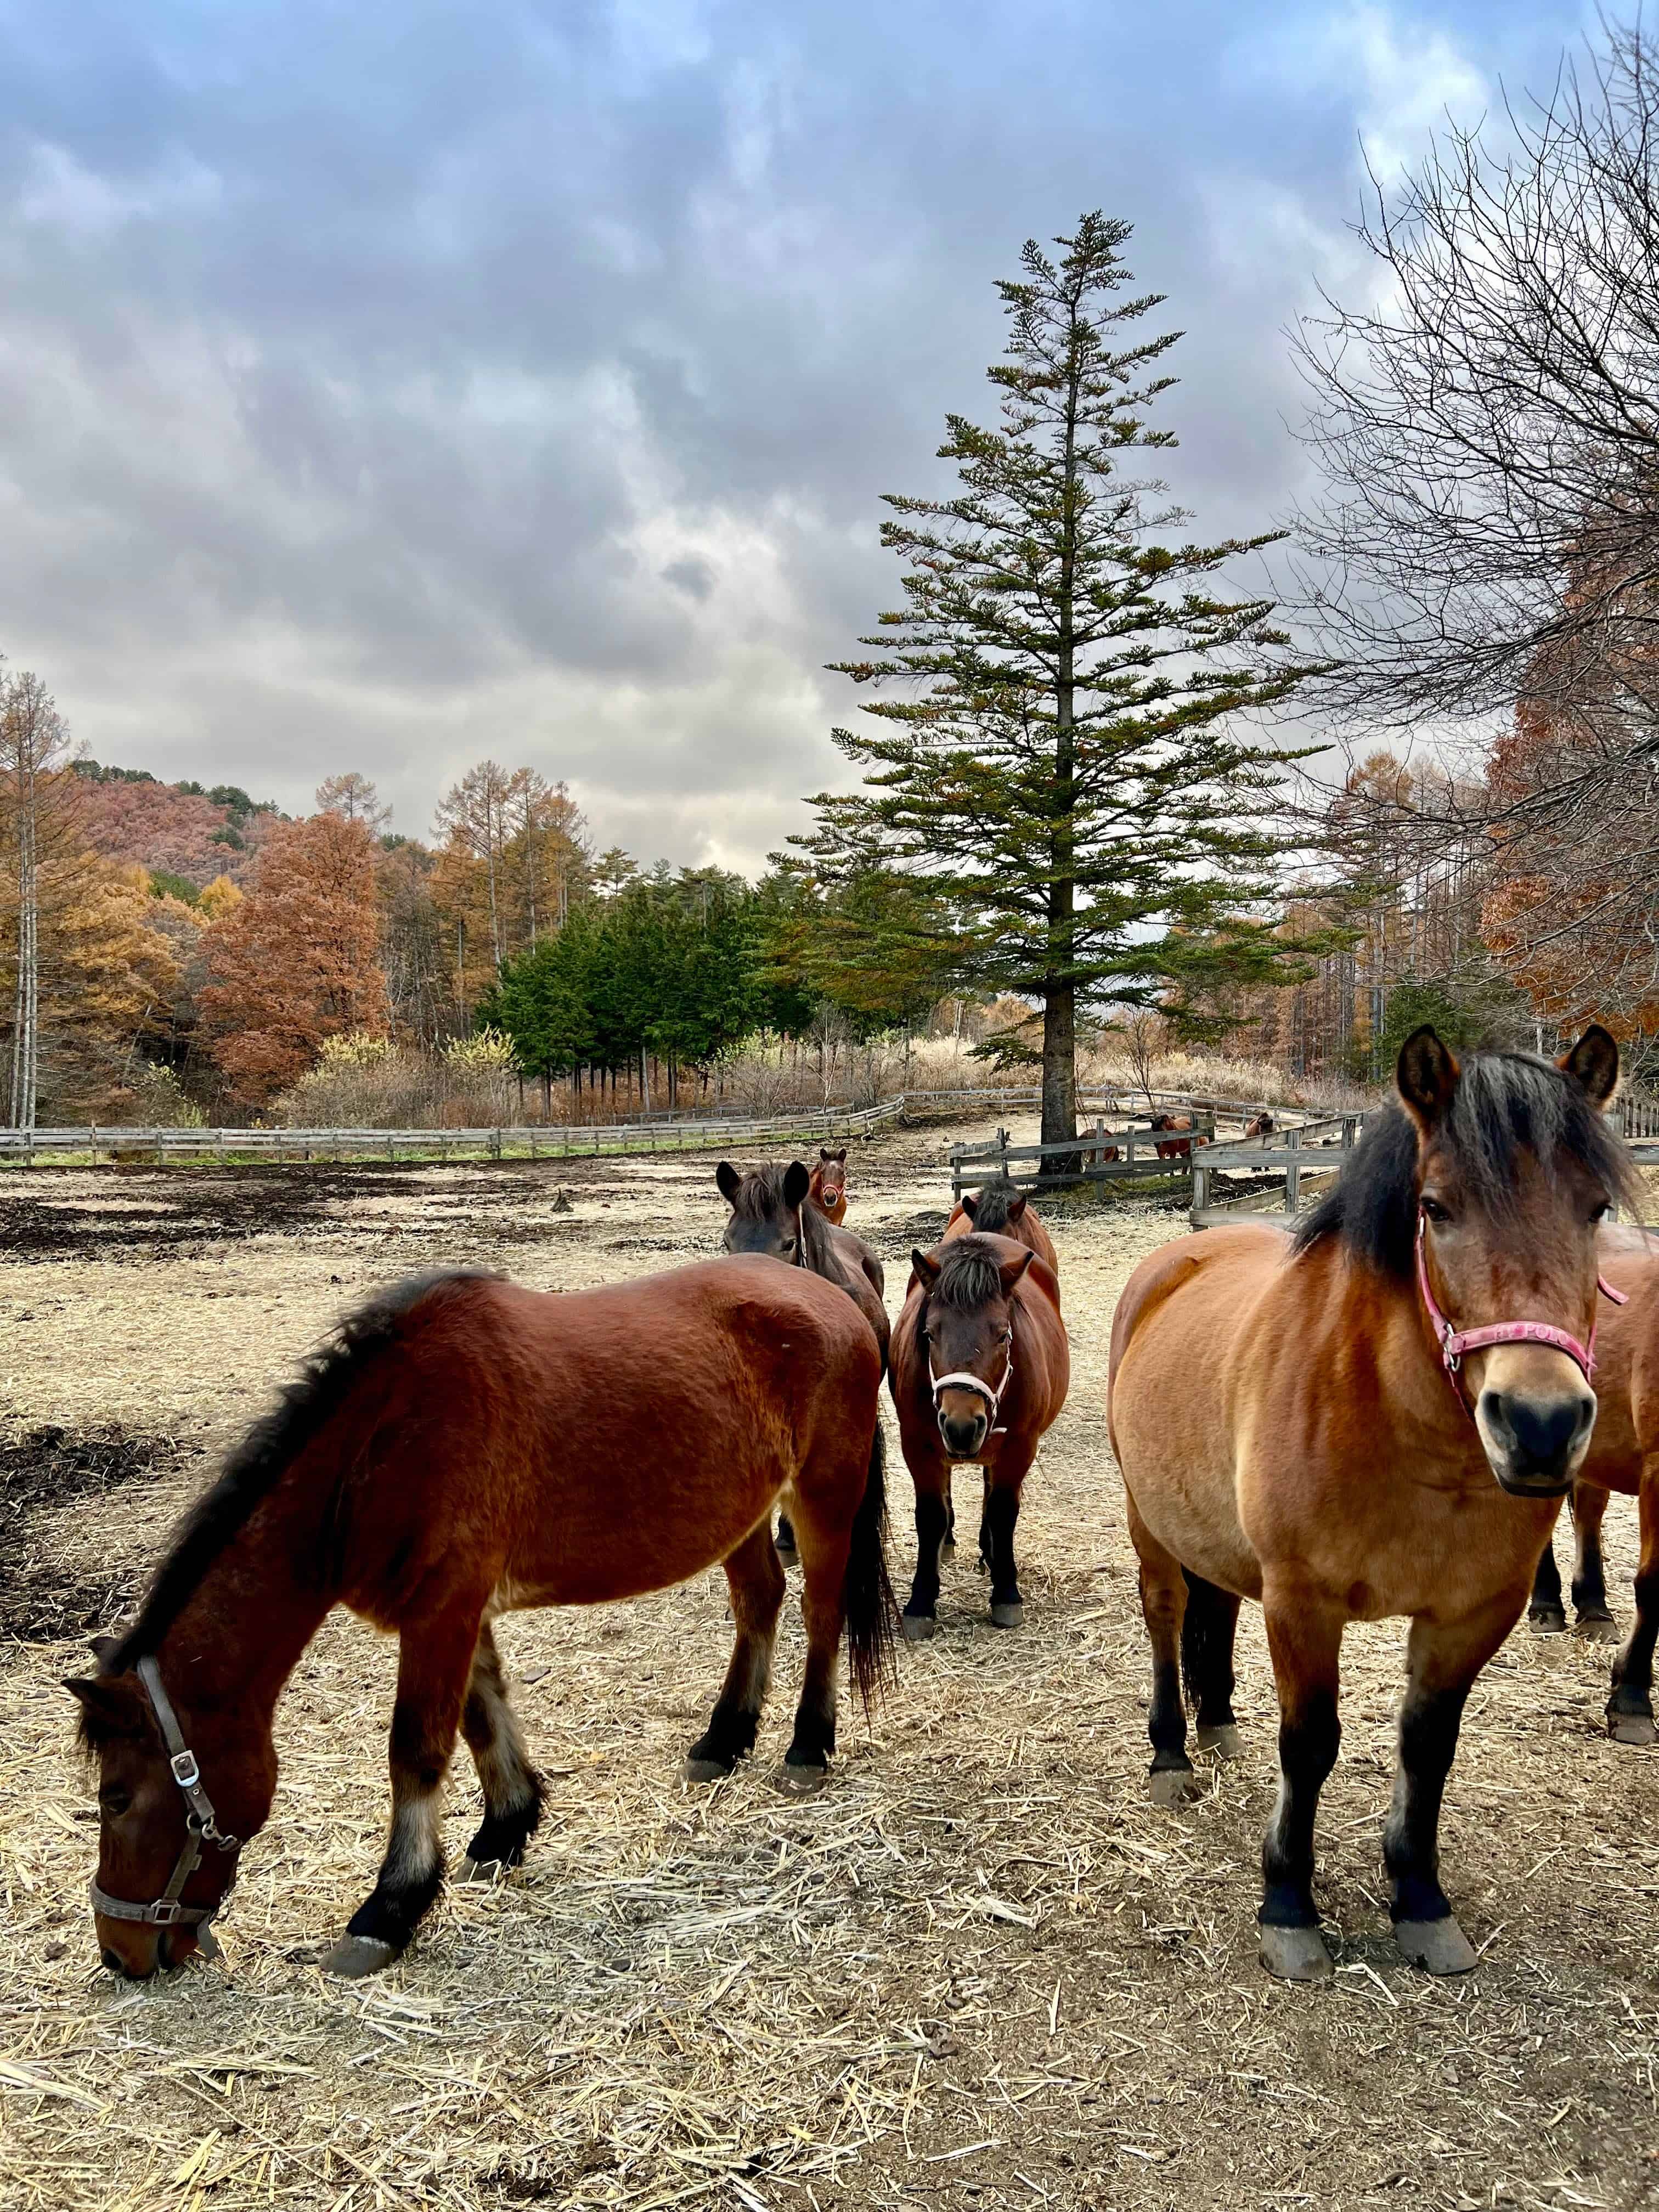 Kiso horses in a paddock.